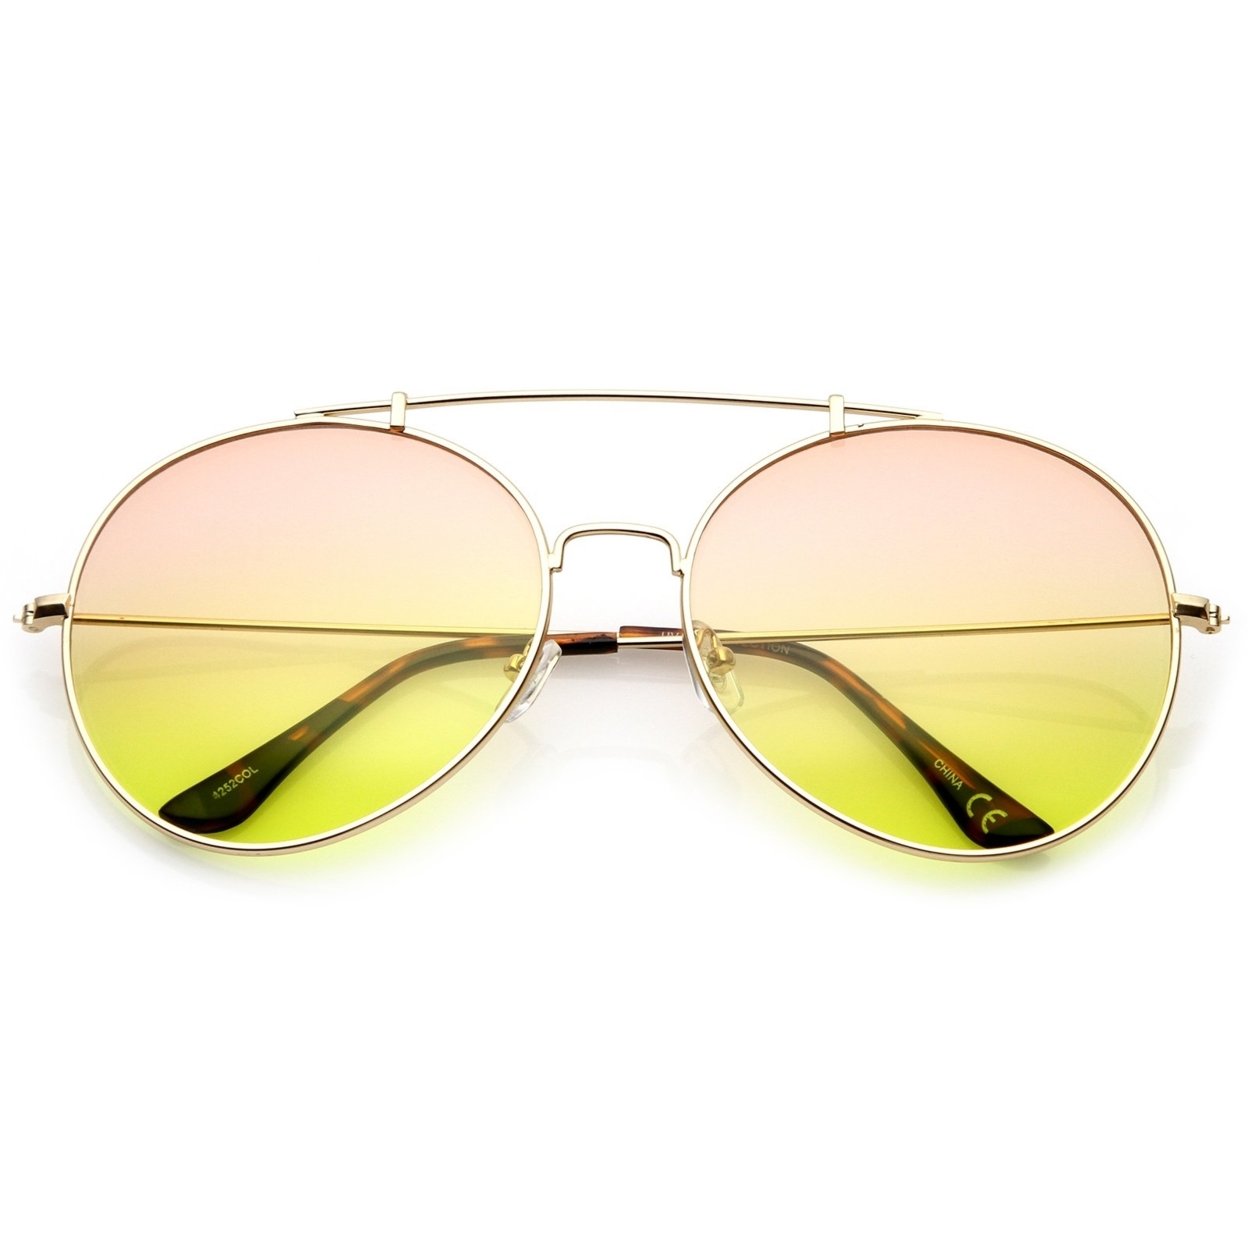 Oversize Metal Double Nose Bridge Slim Arms Gradient Round Lens Aviator Sunglasses 64mm - Gold / Orange-Yellow